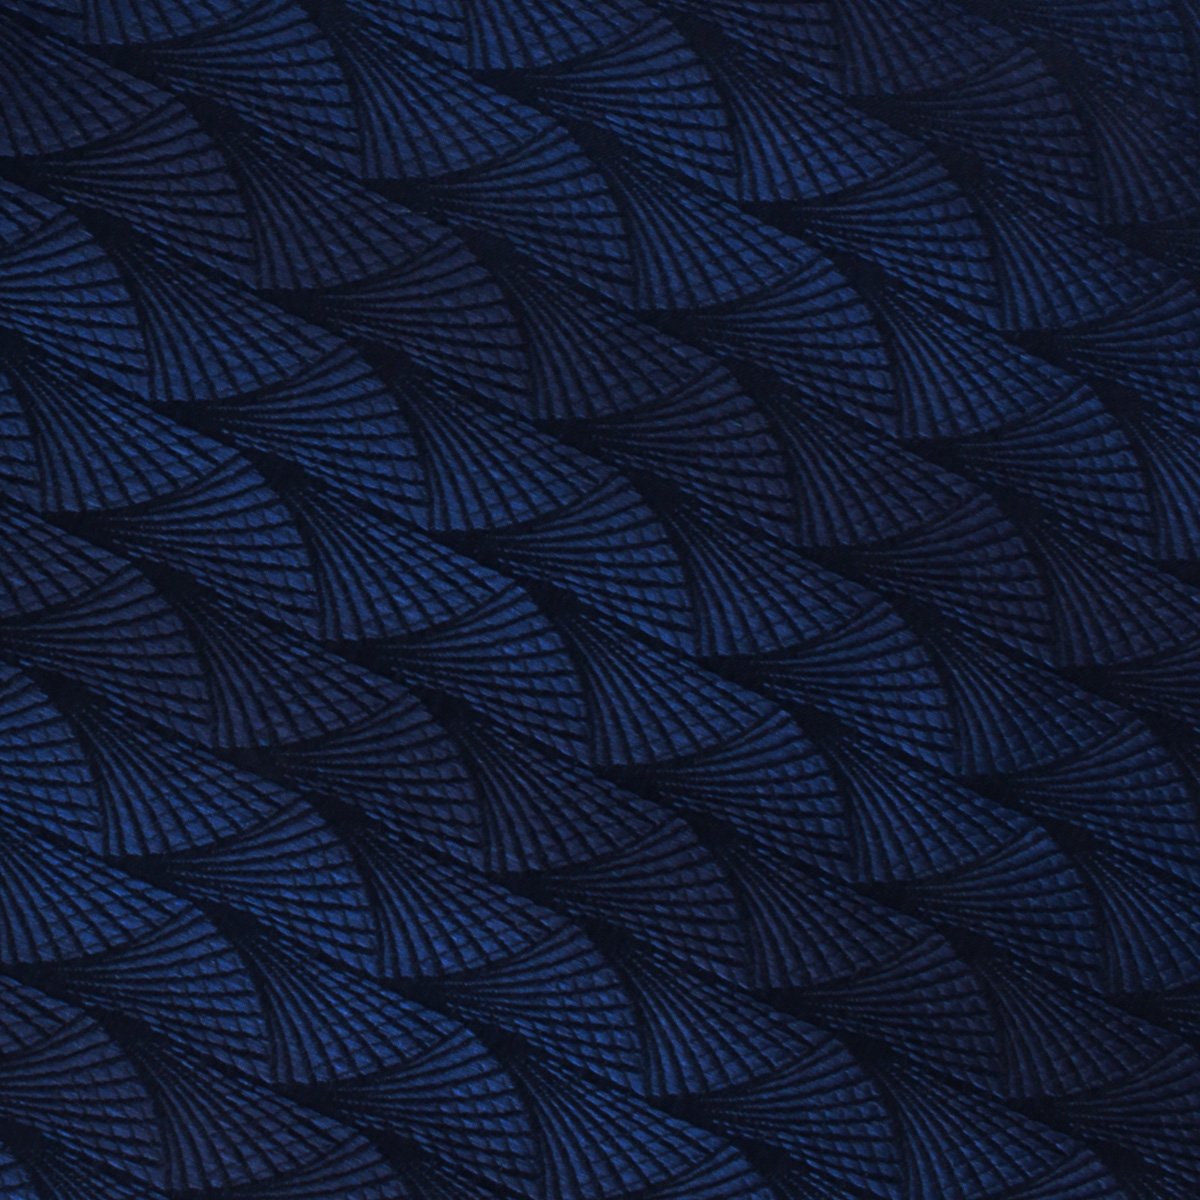 Kiso Valley Navy Blue Necktie Fabric